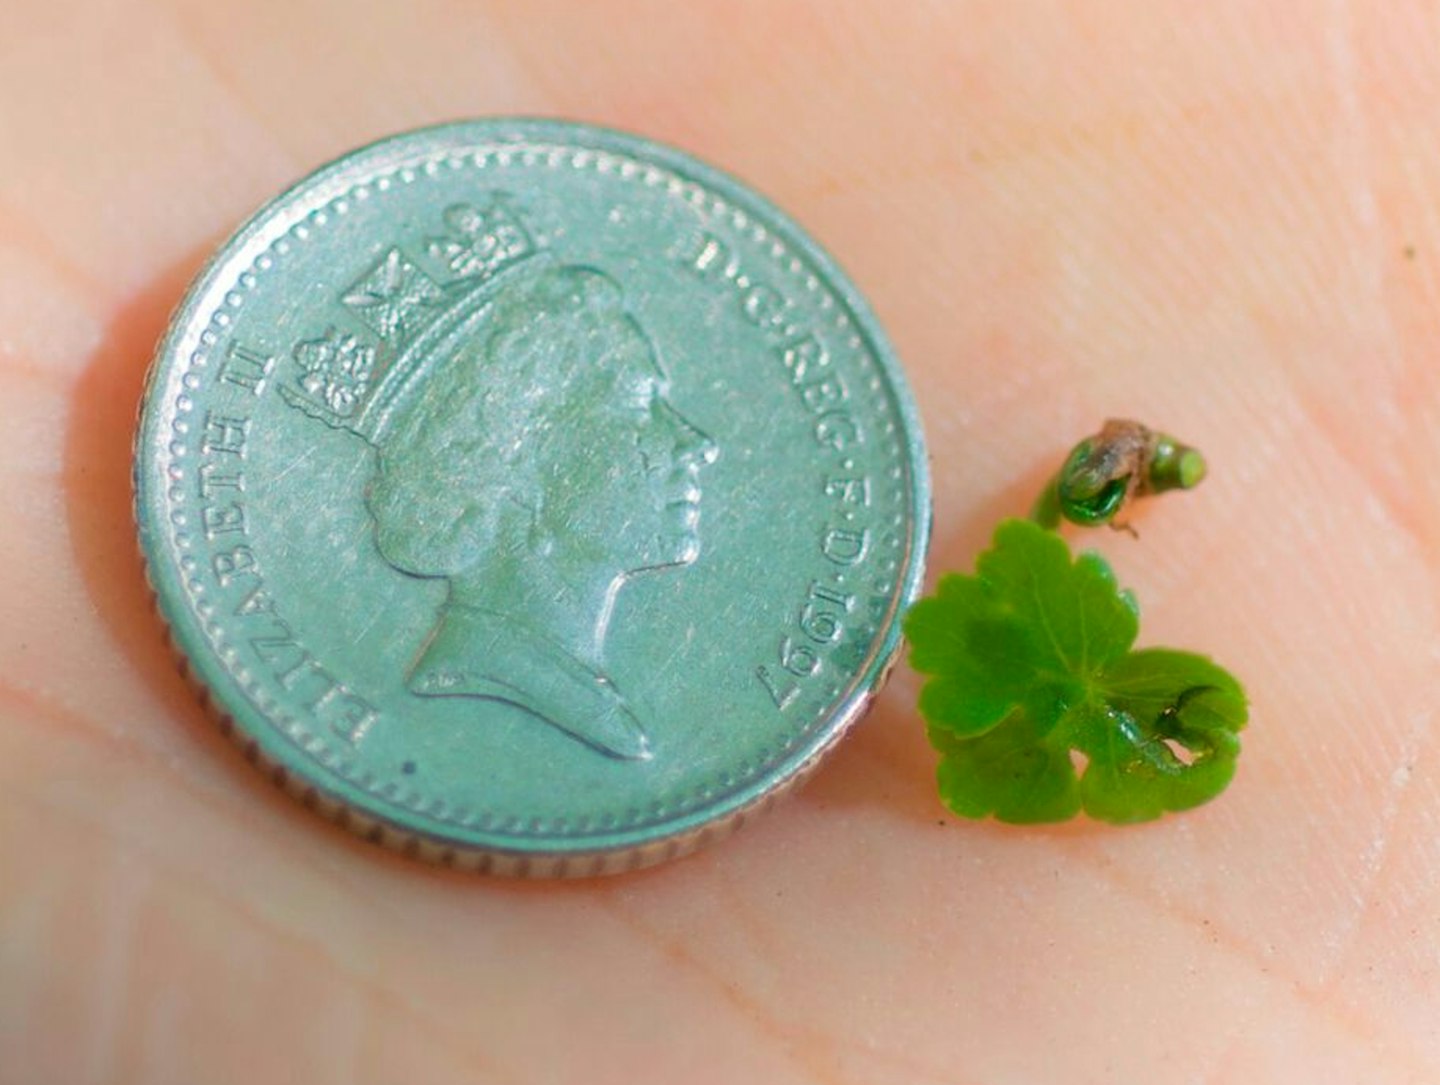 A 5p piece-sized bit of pennywort can start an infestation